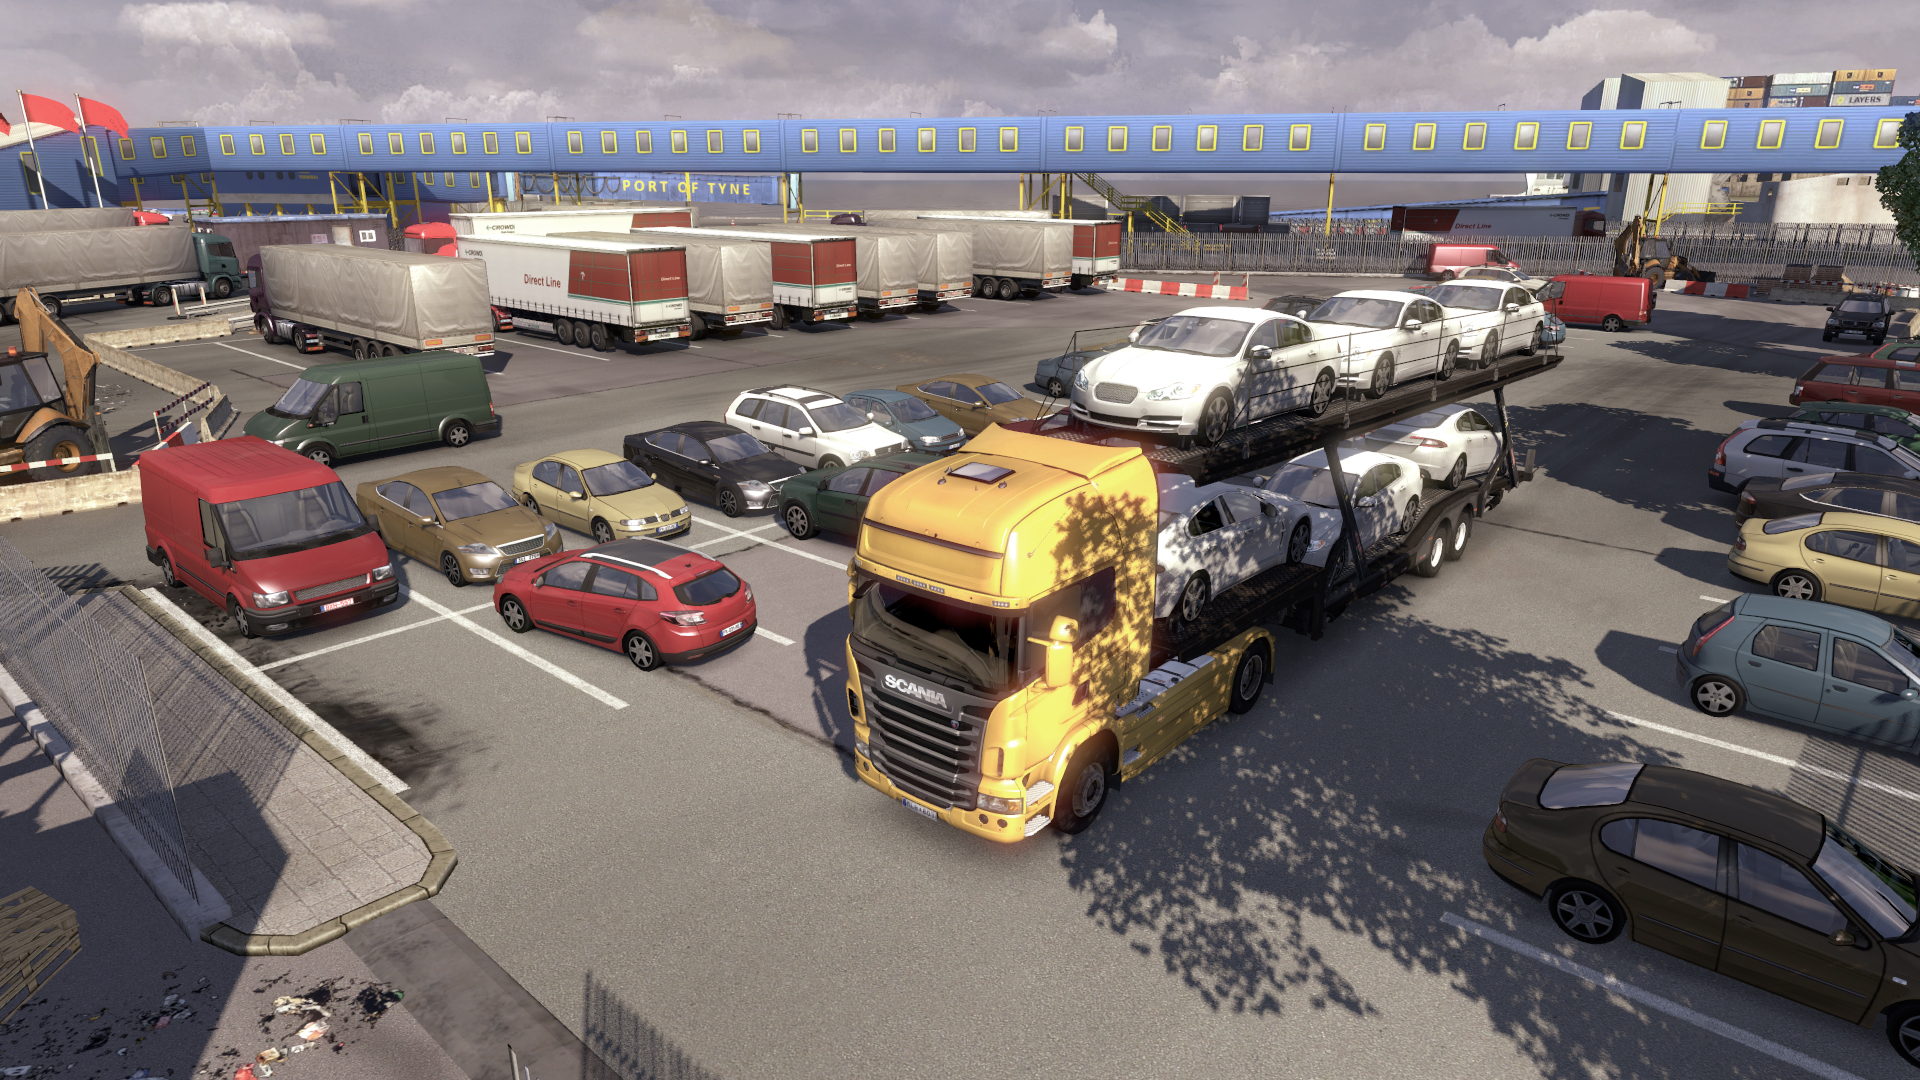 Scania Truck Driving Simulator screenshot